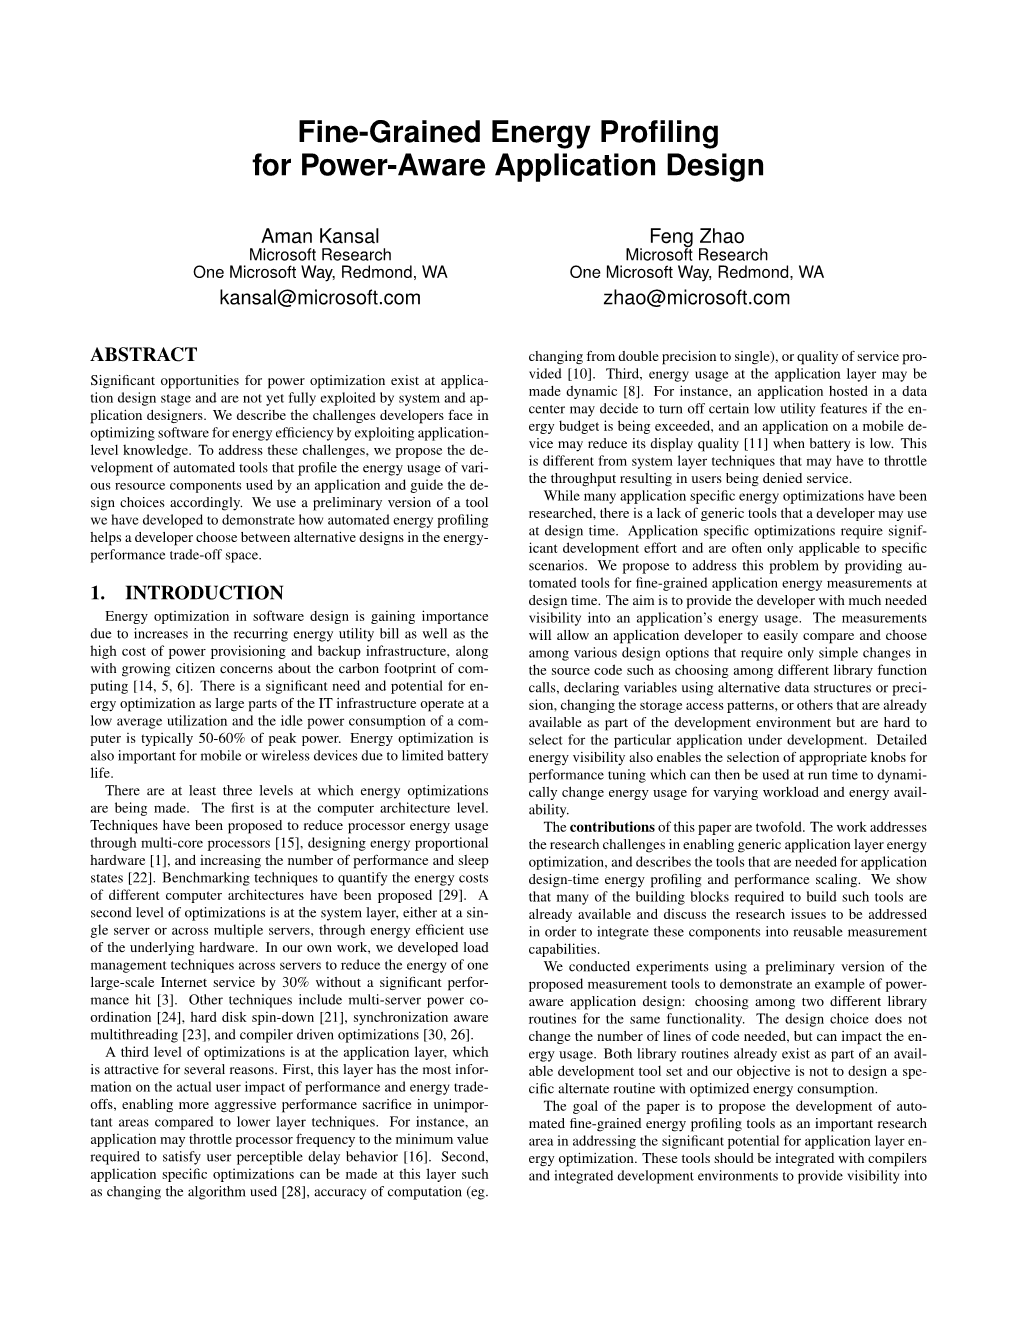 Fine-Grained Energy Profiling for Power-Aware Application Design